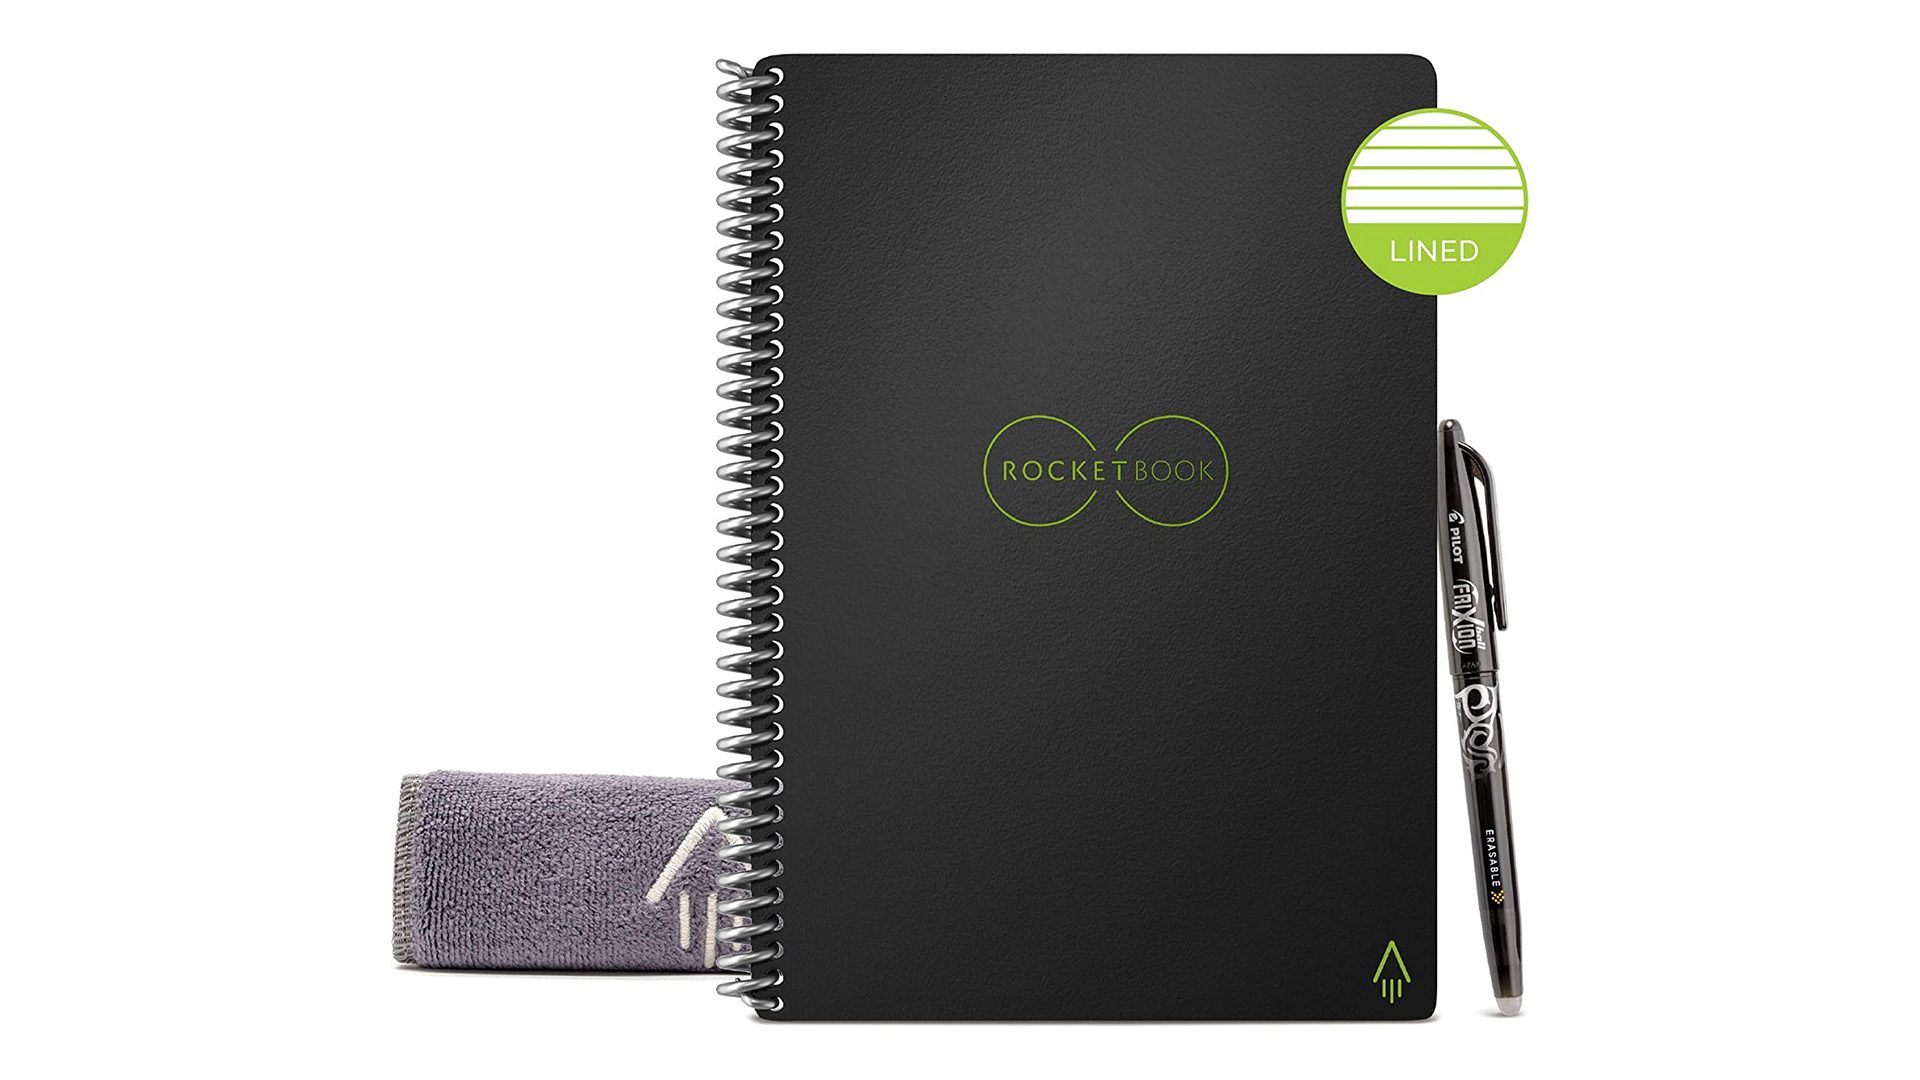 RocketBook's Smart Reusable Notebook